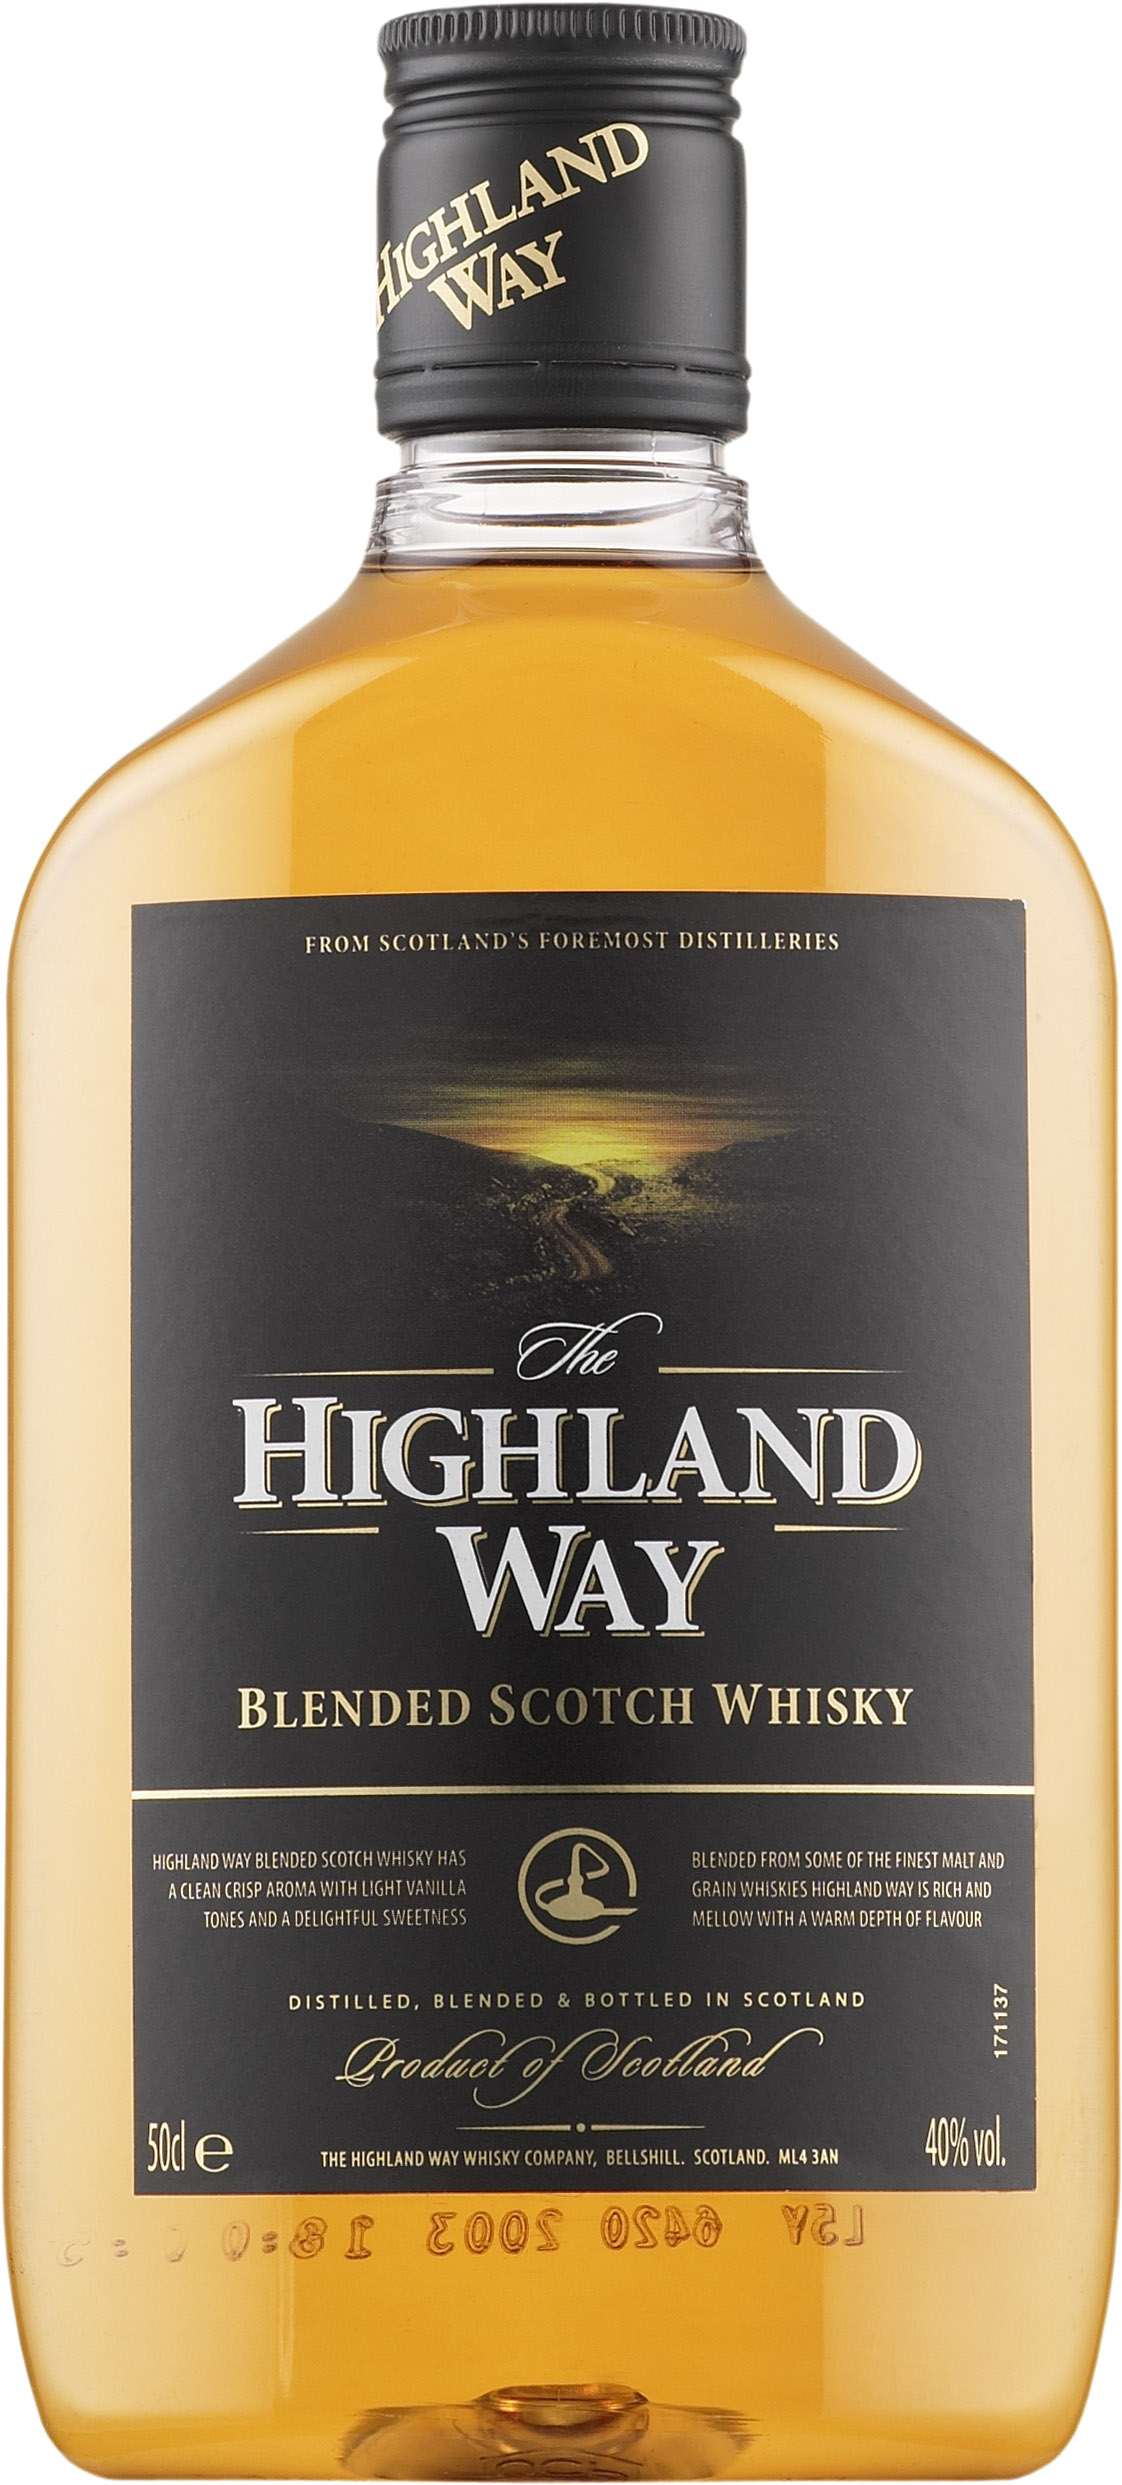 The Highland Way plastic bottle